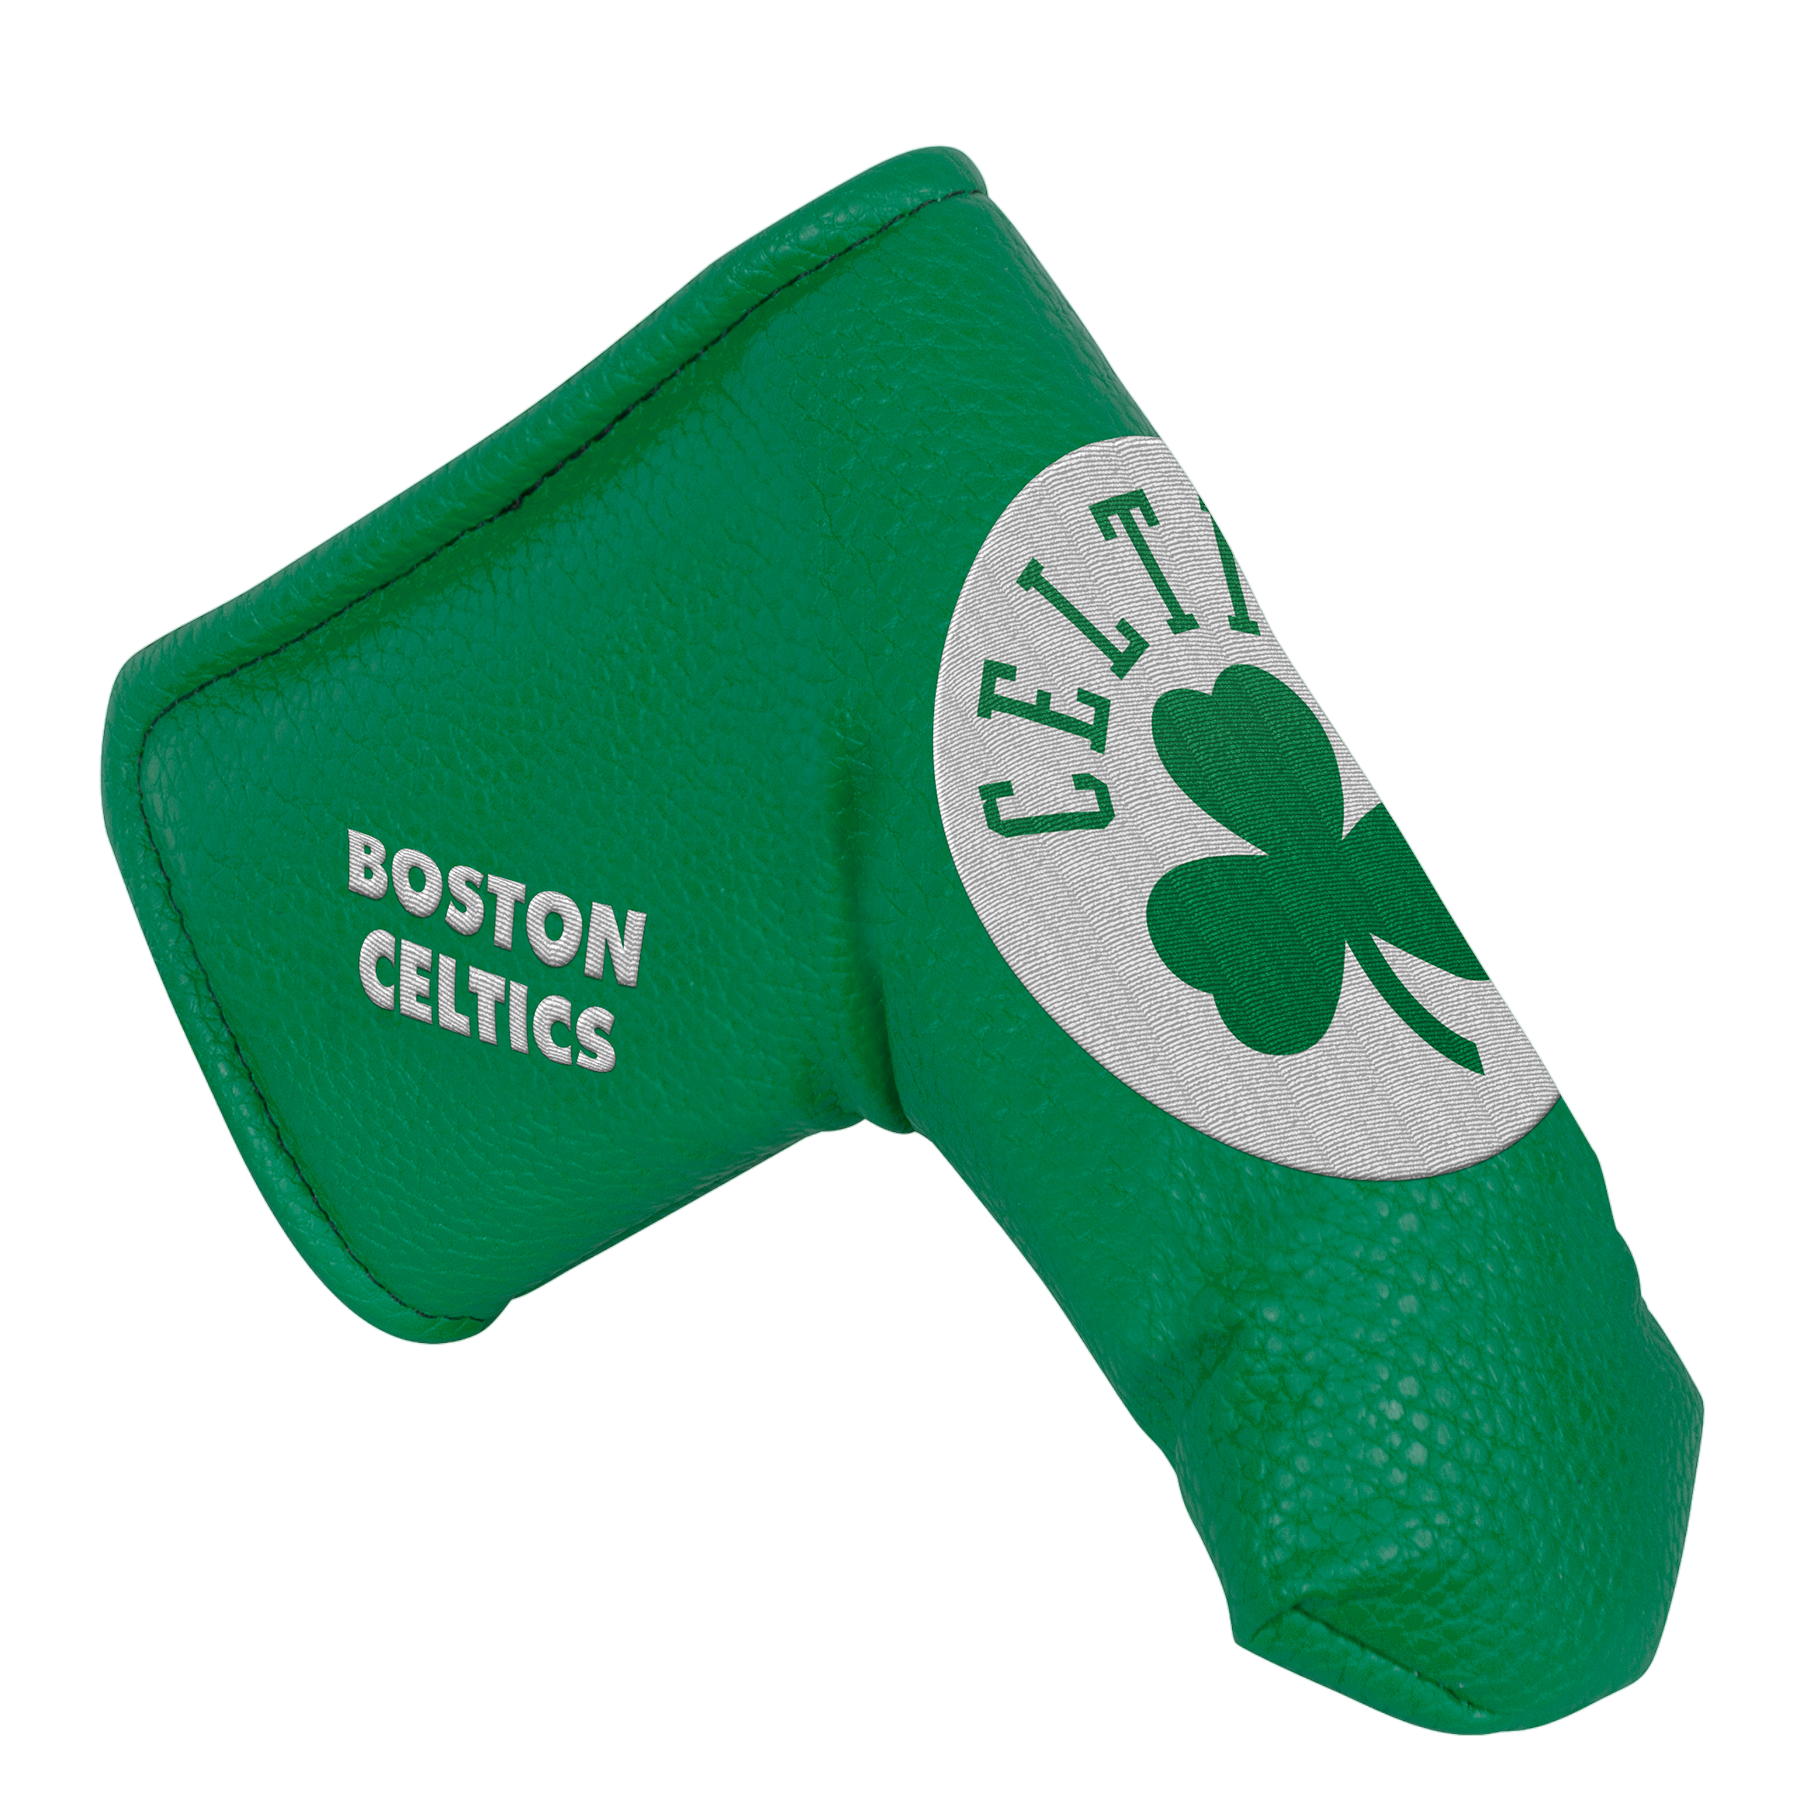 Boston Celtics Blade Putter Cover